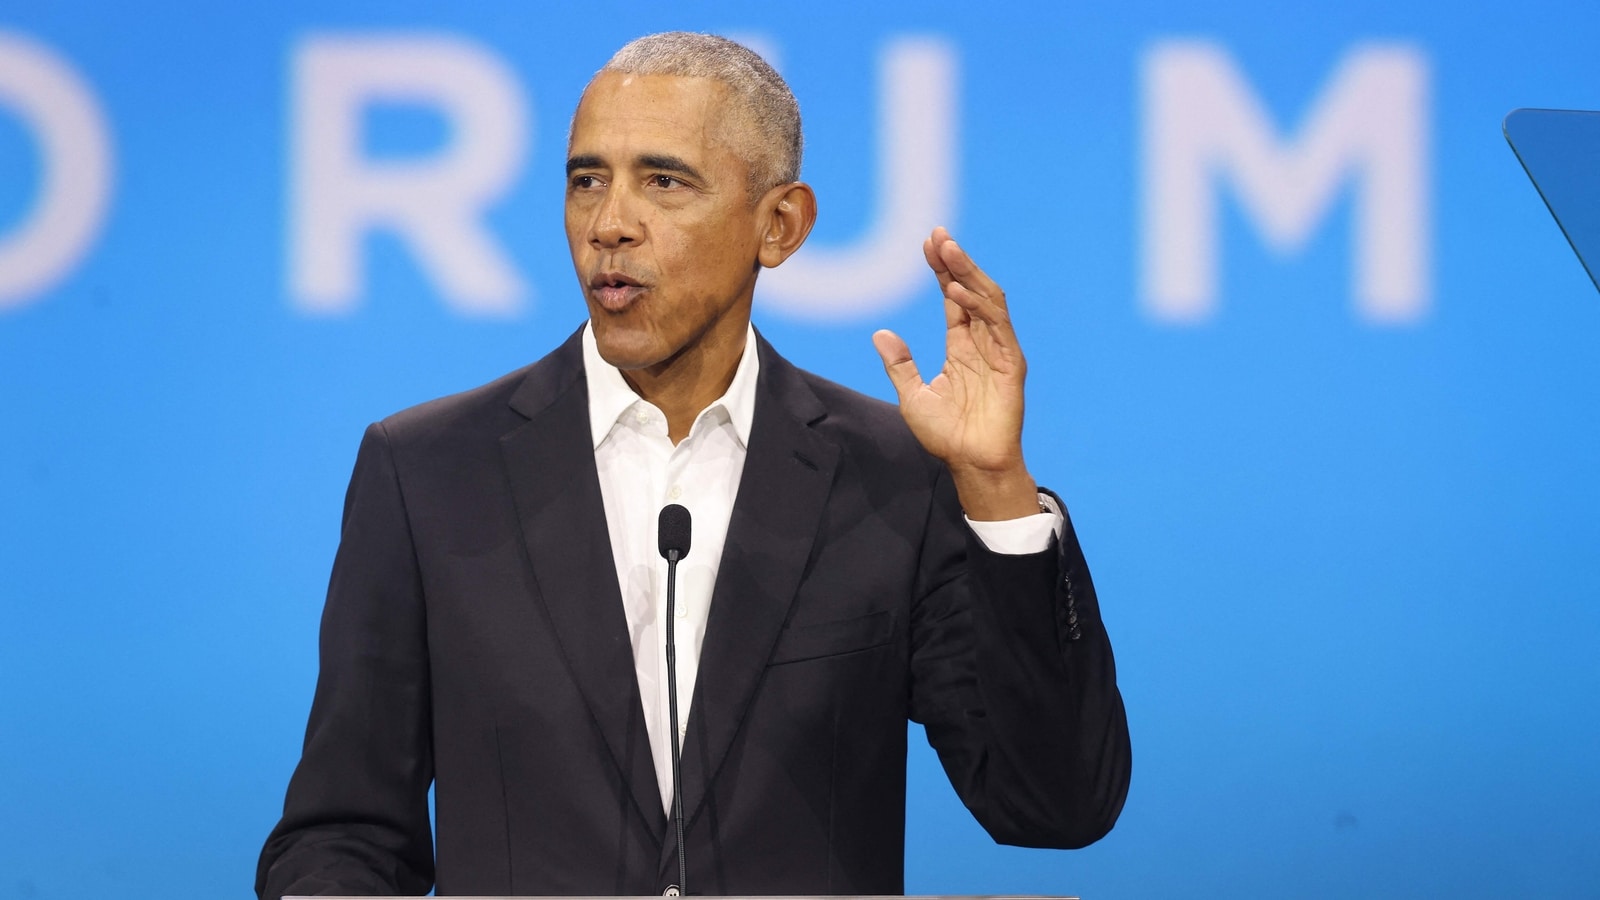 Obama’s ‘Leave The World Behind’ sparks backlash over scene ‘demonizing whites’ | Hollywood